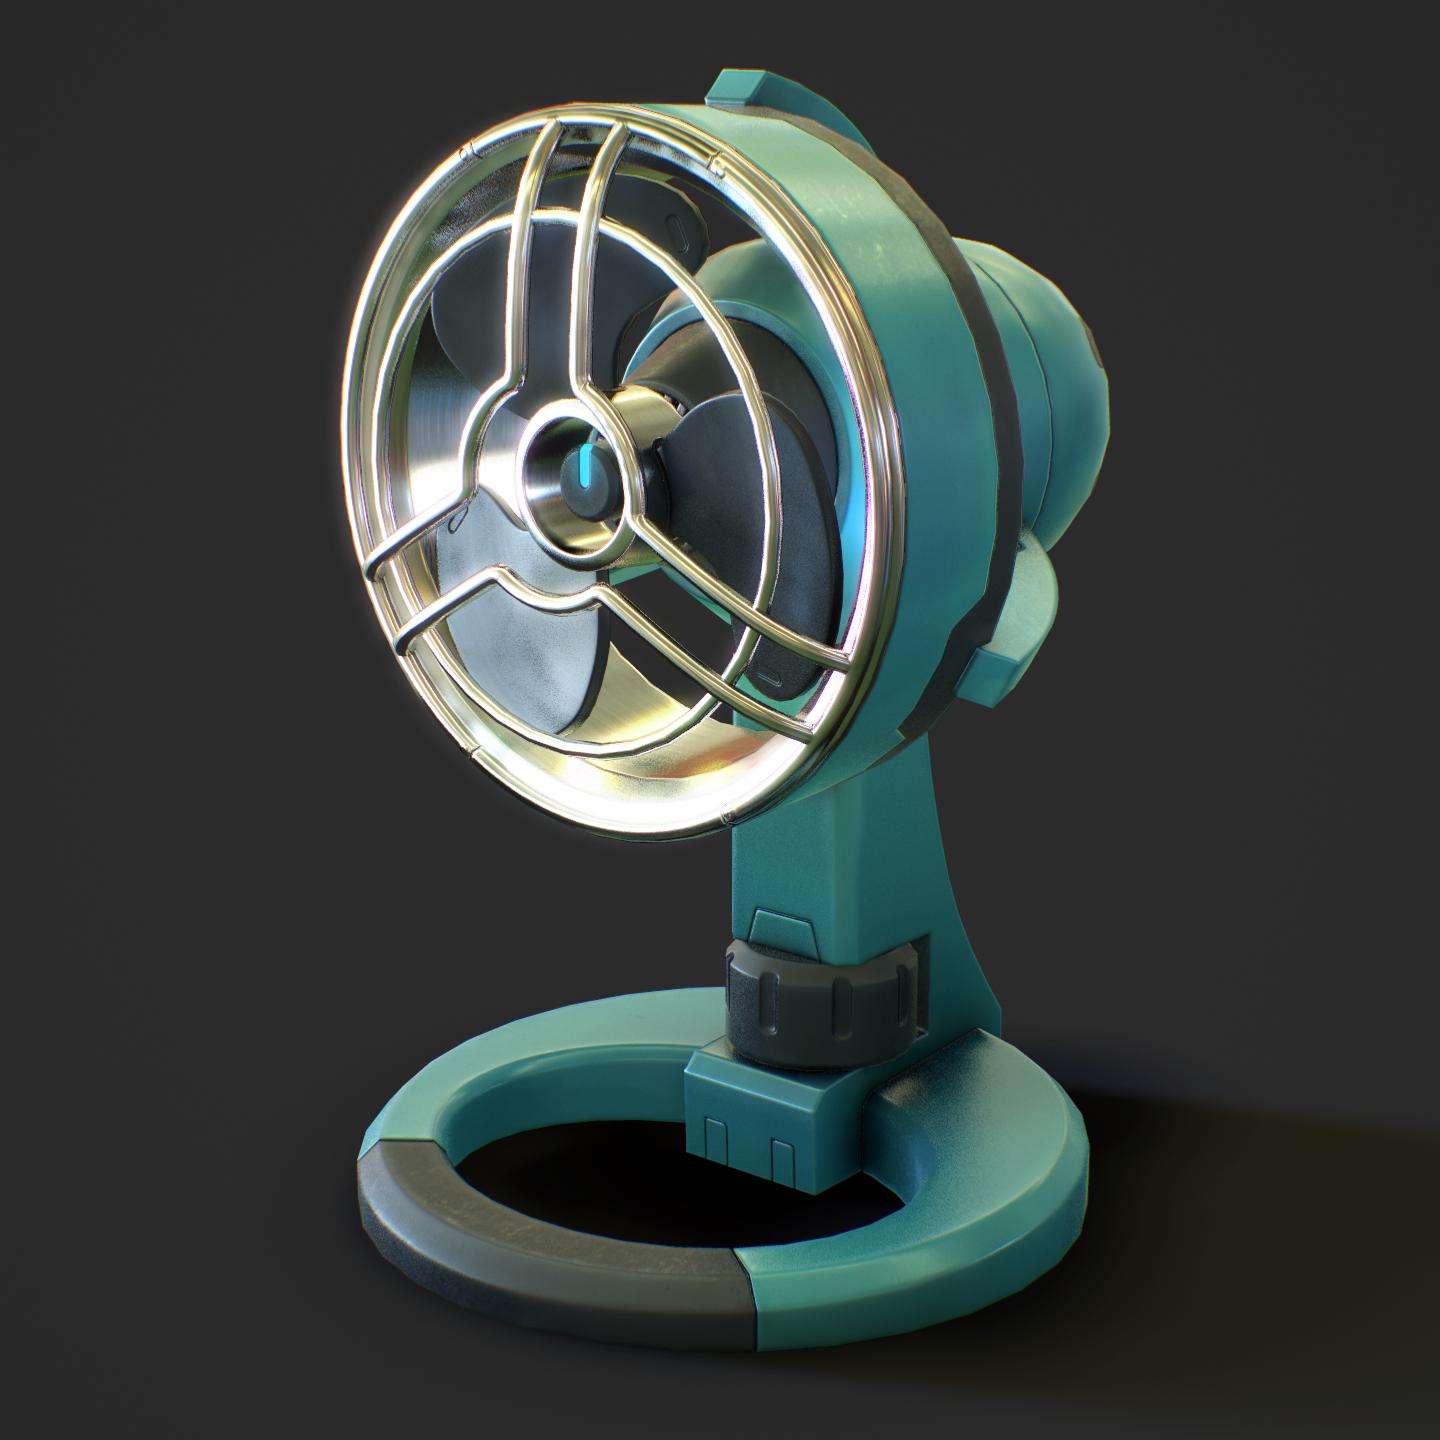 A render of an overwatch styled fan